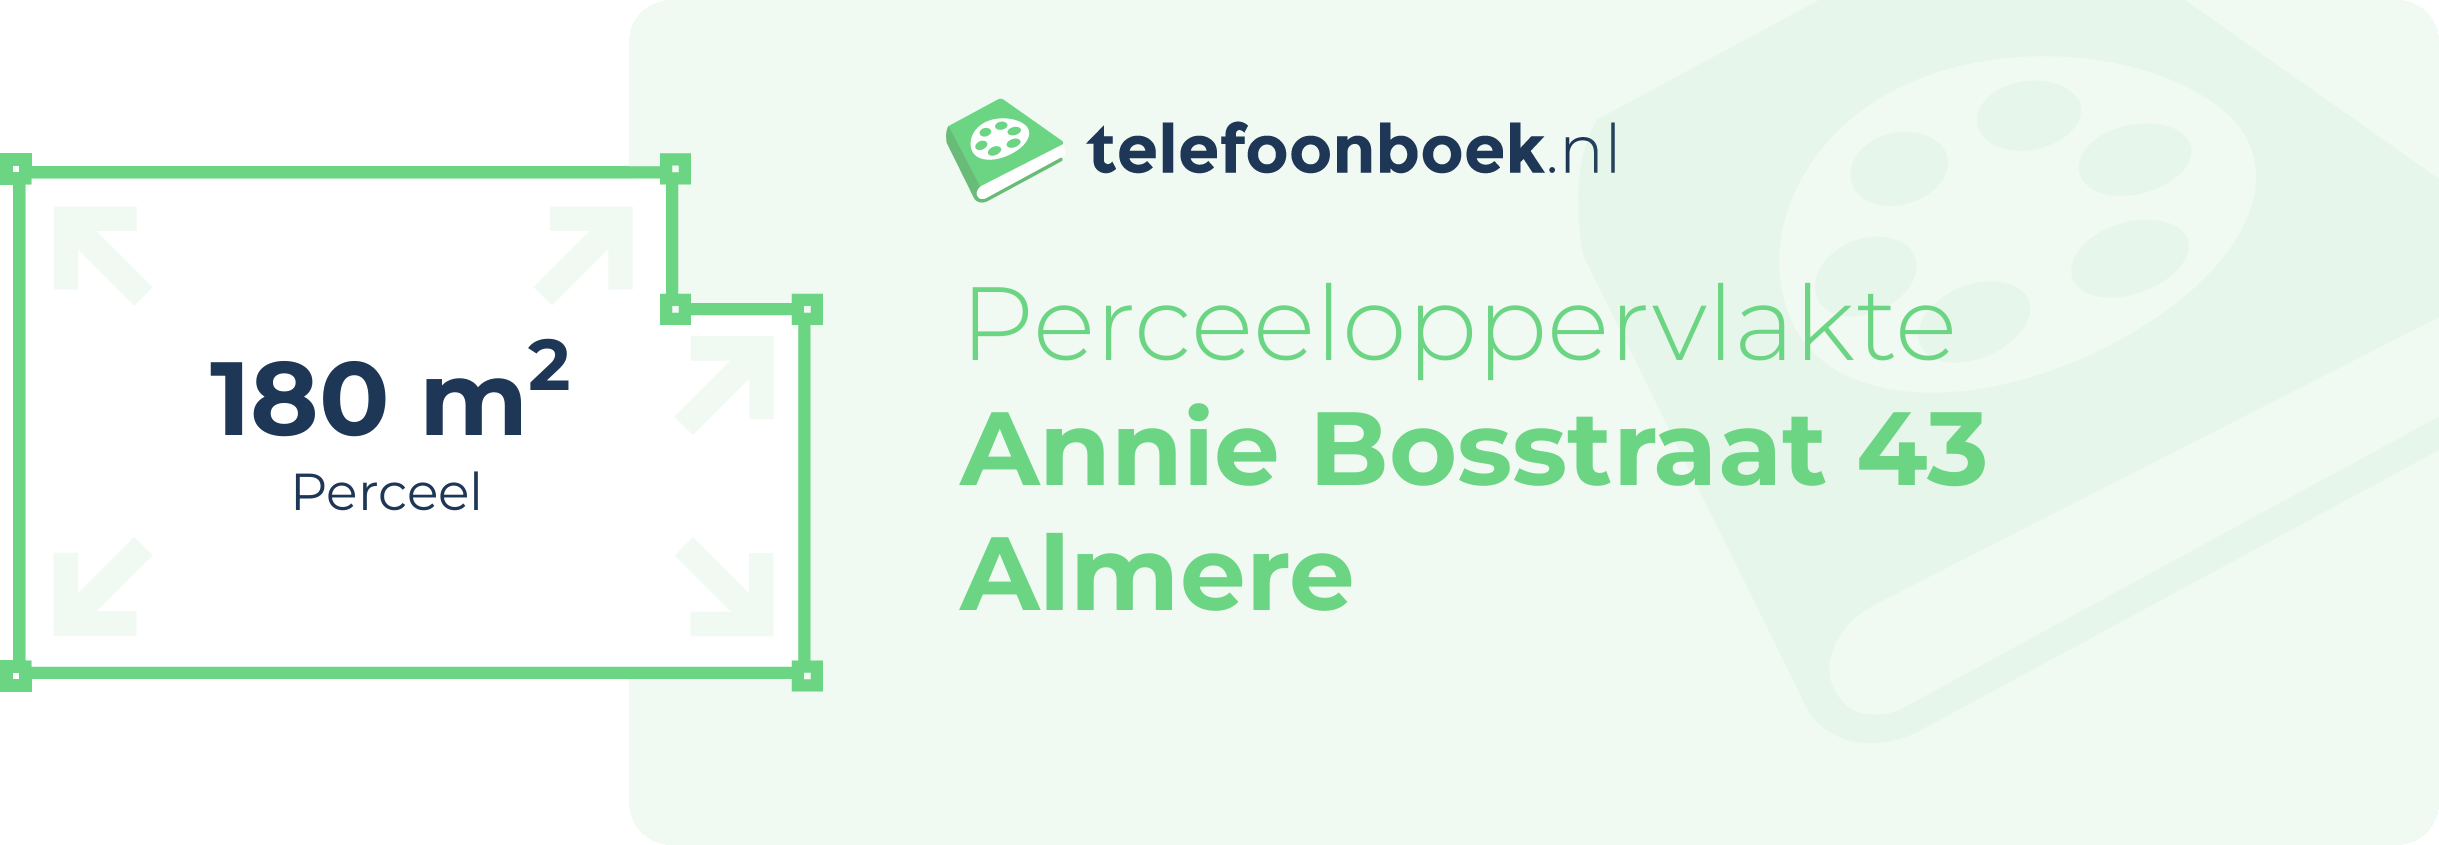 Perceeloppervlakte Annie Bosstraat 43 Almere